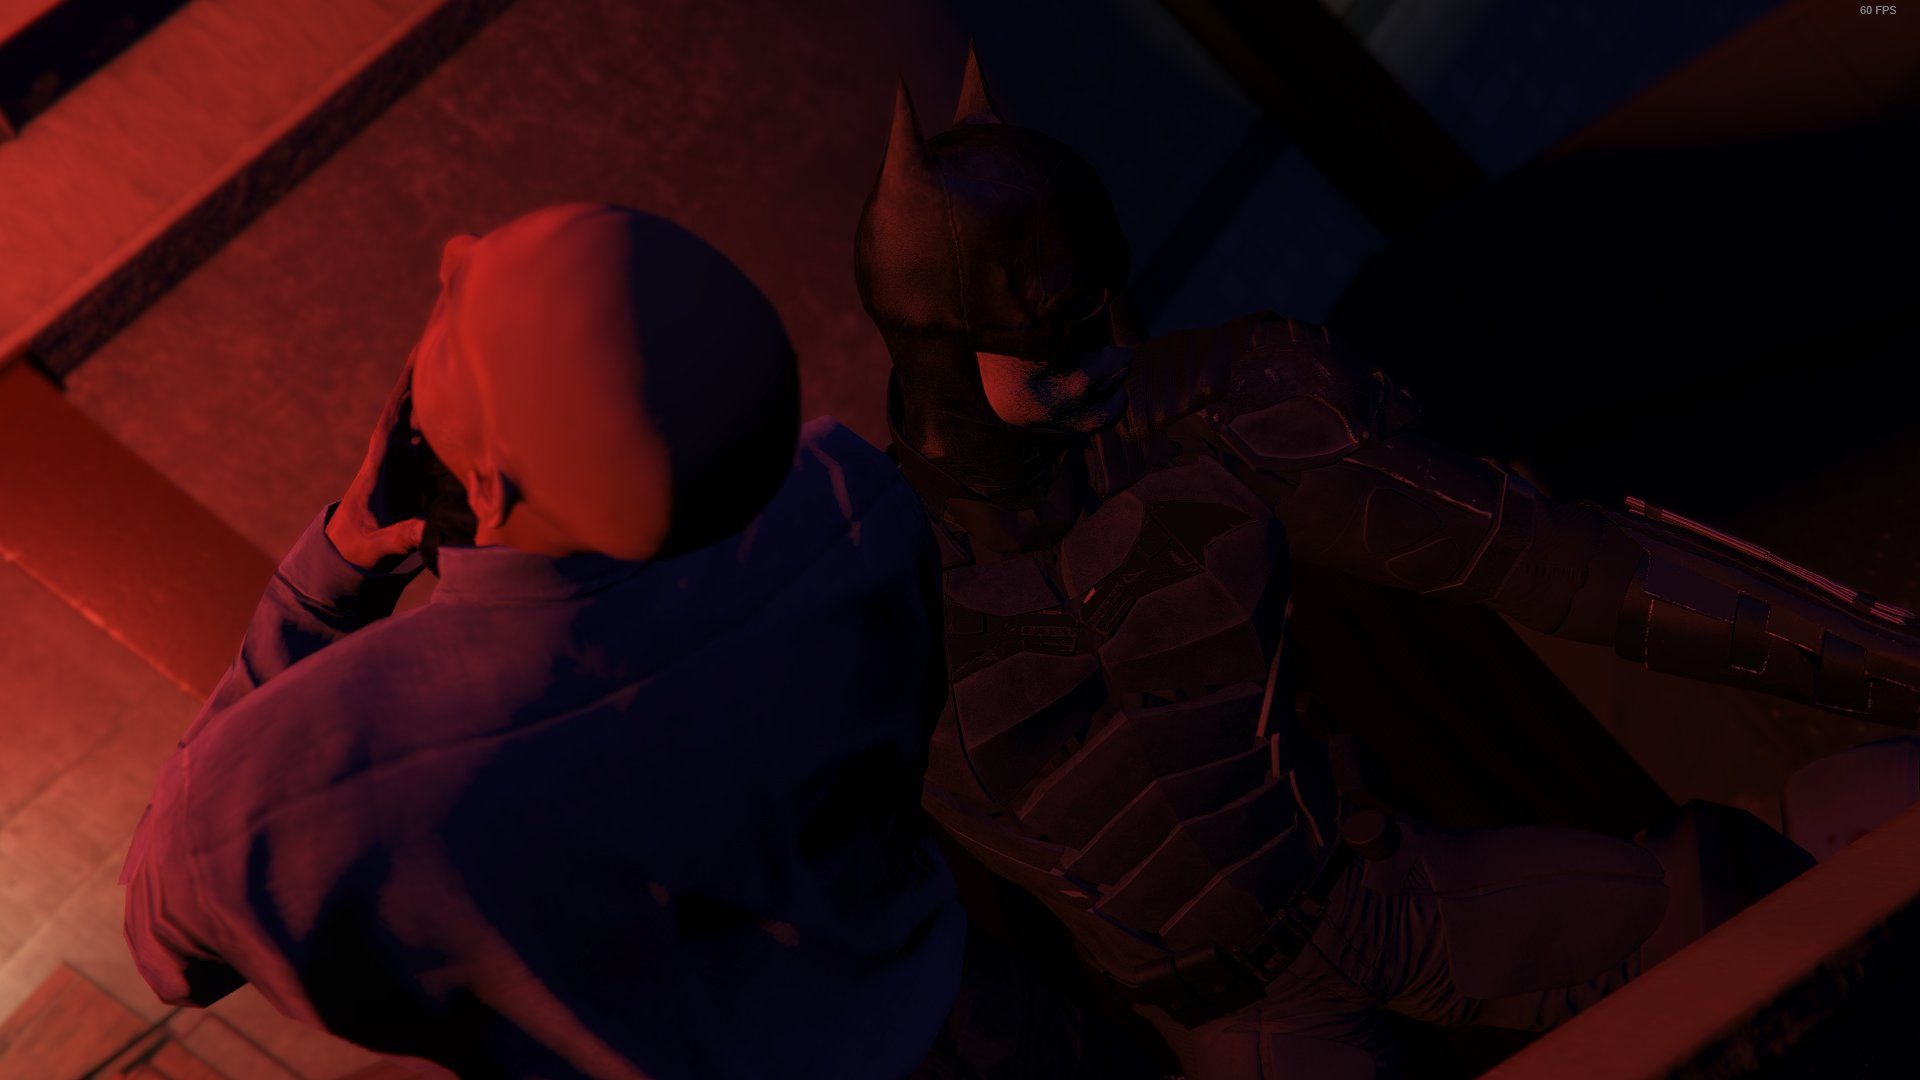 glowing eyes pack (Batman Arkham City) mod by thebatmanhimself on